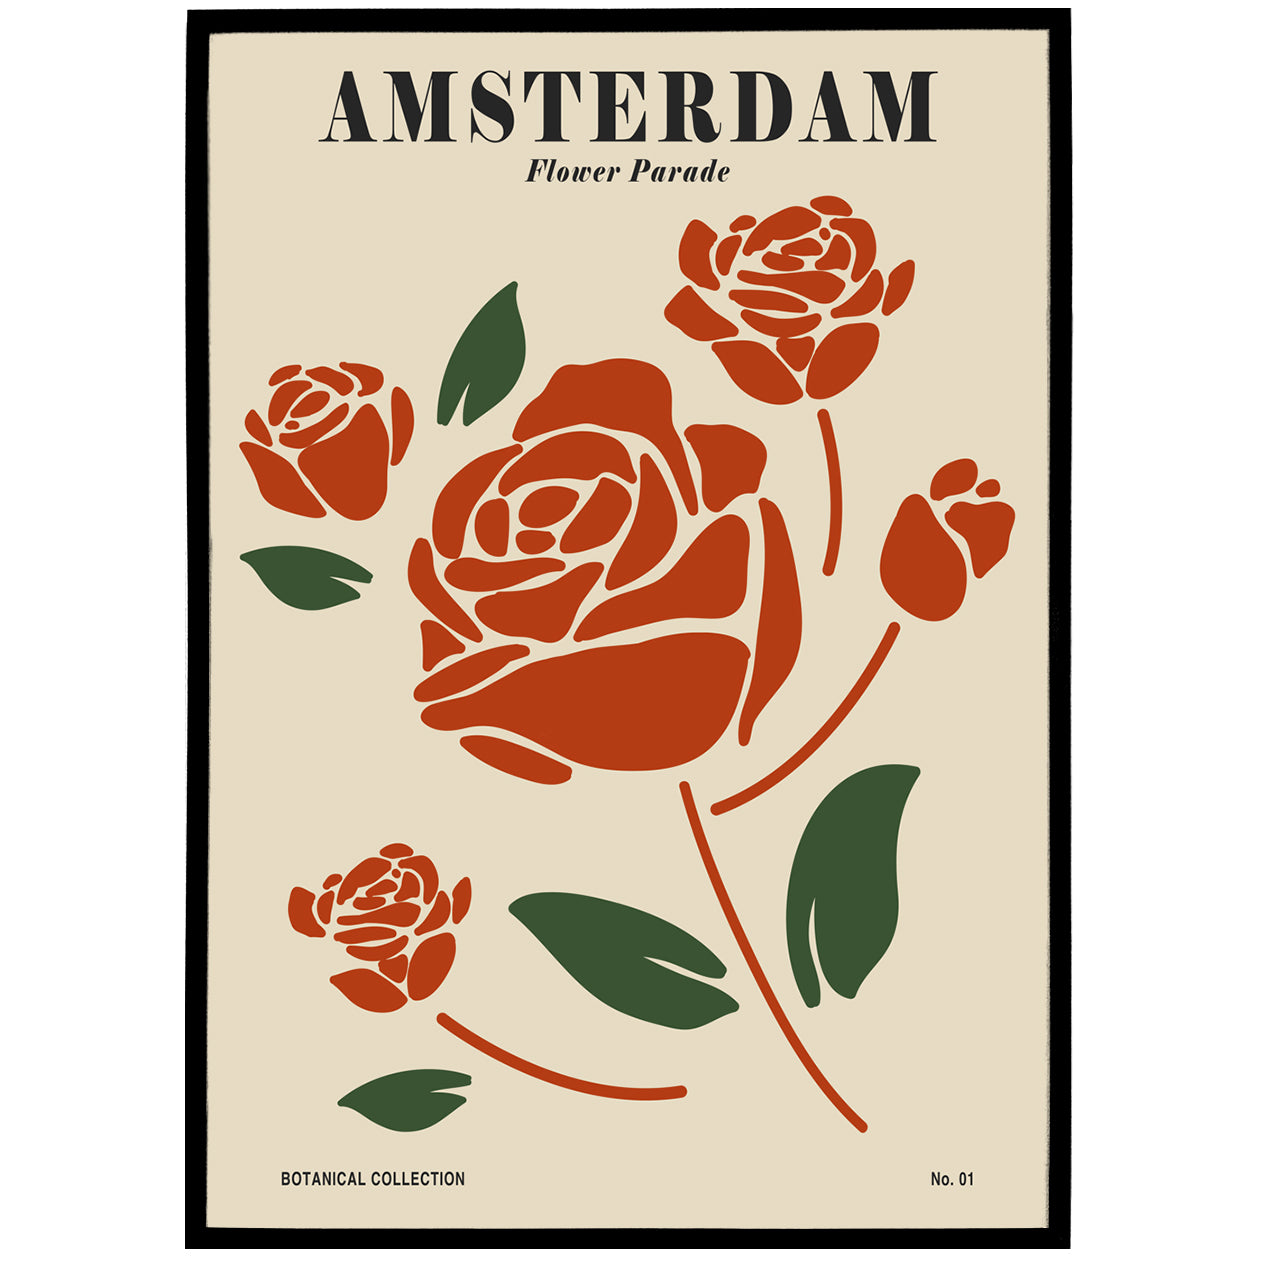 Amsterdam Flower Parade Poster